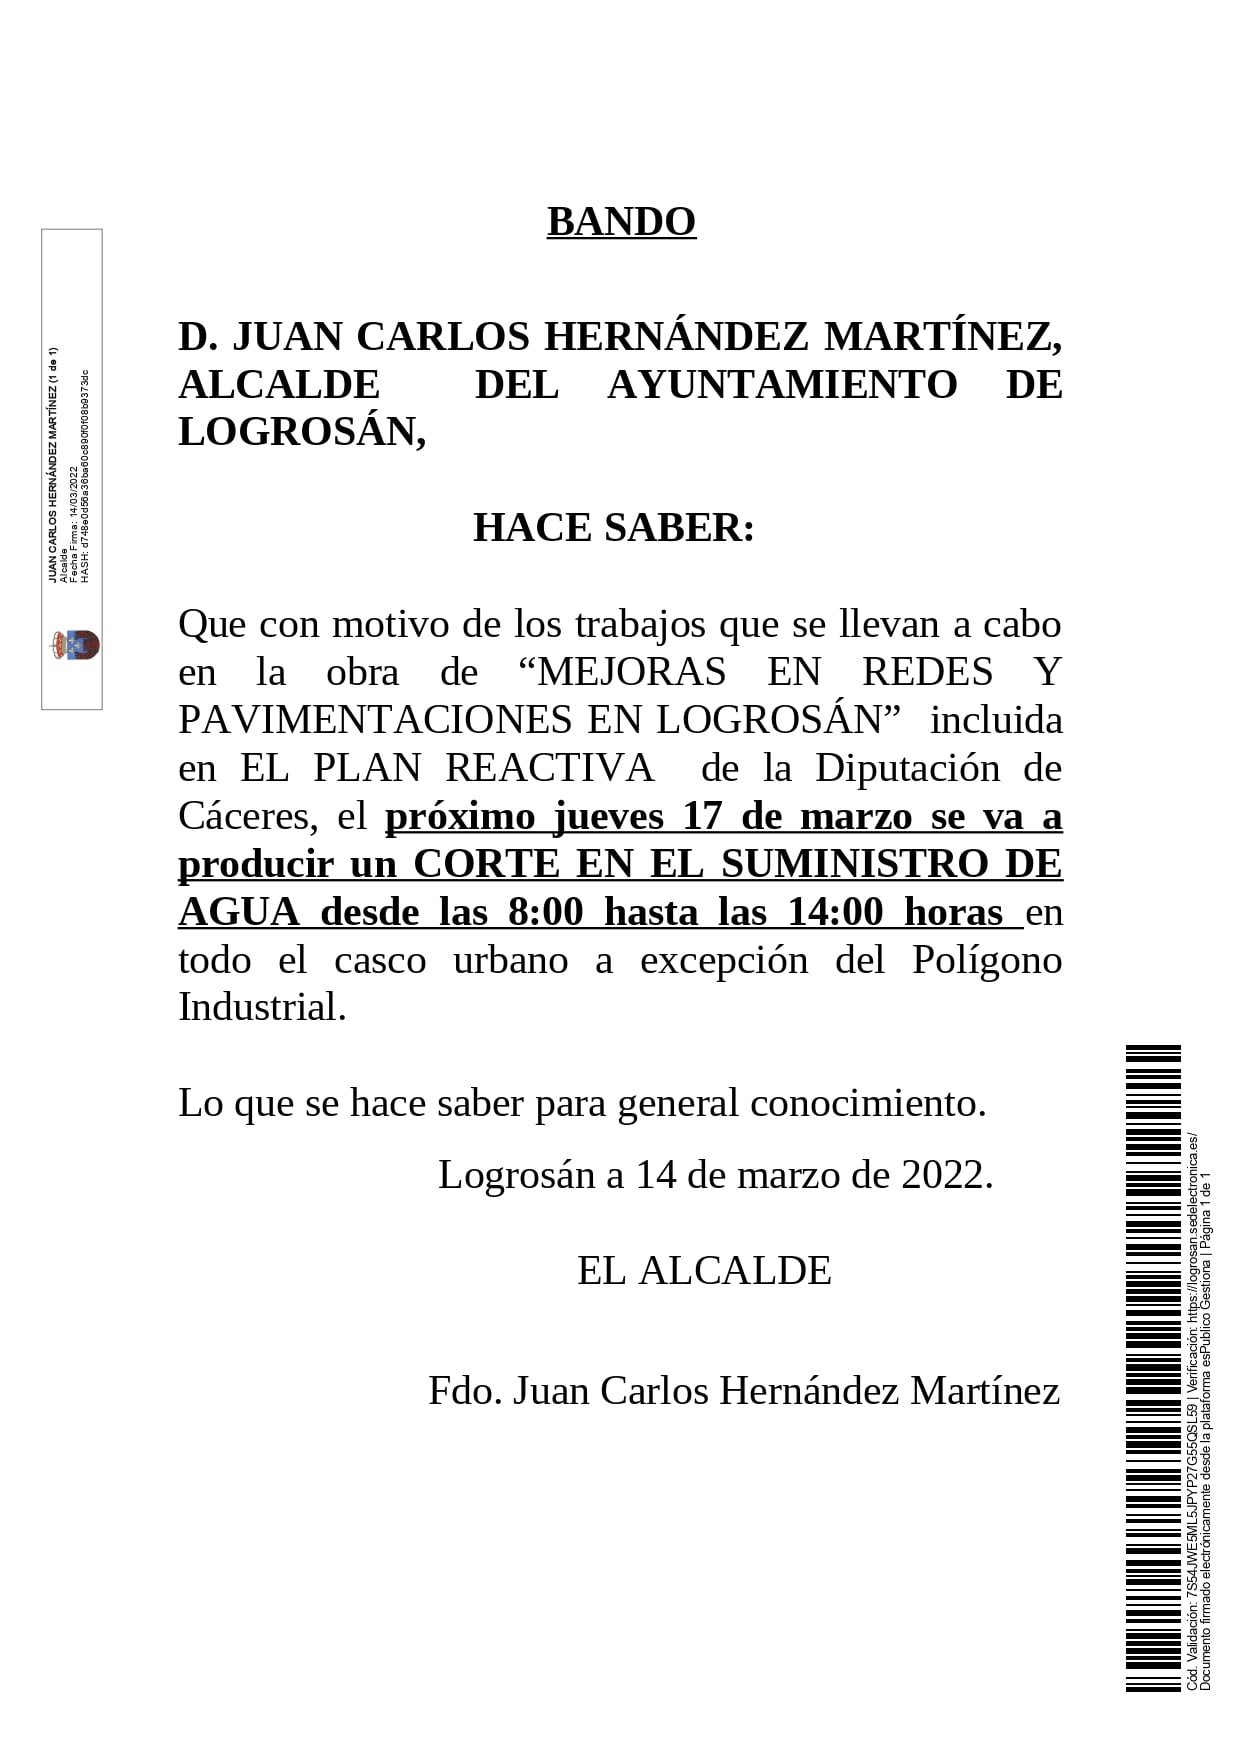 Corte en el suministro de agua (marzo 2022) - Logrosán (Cáceres)